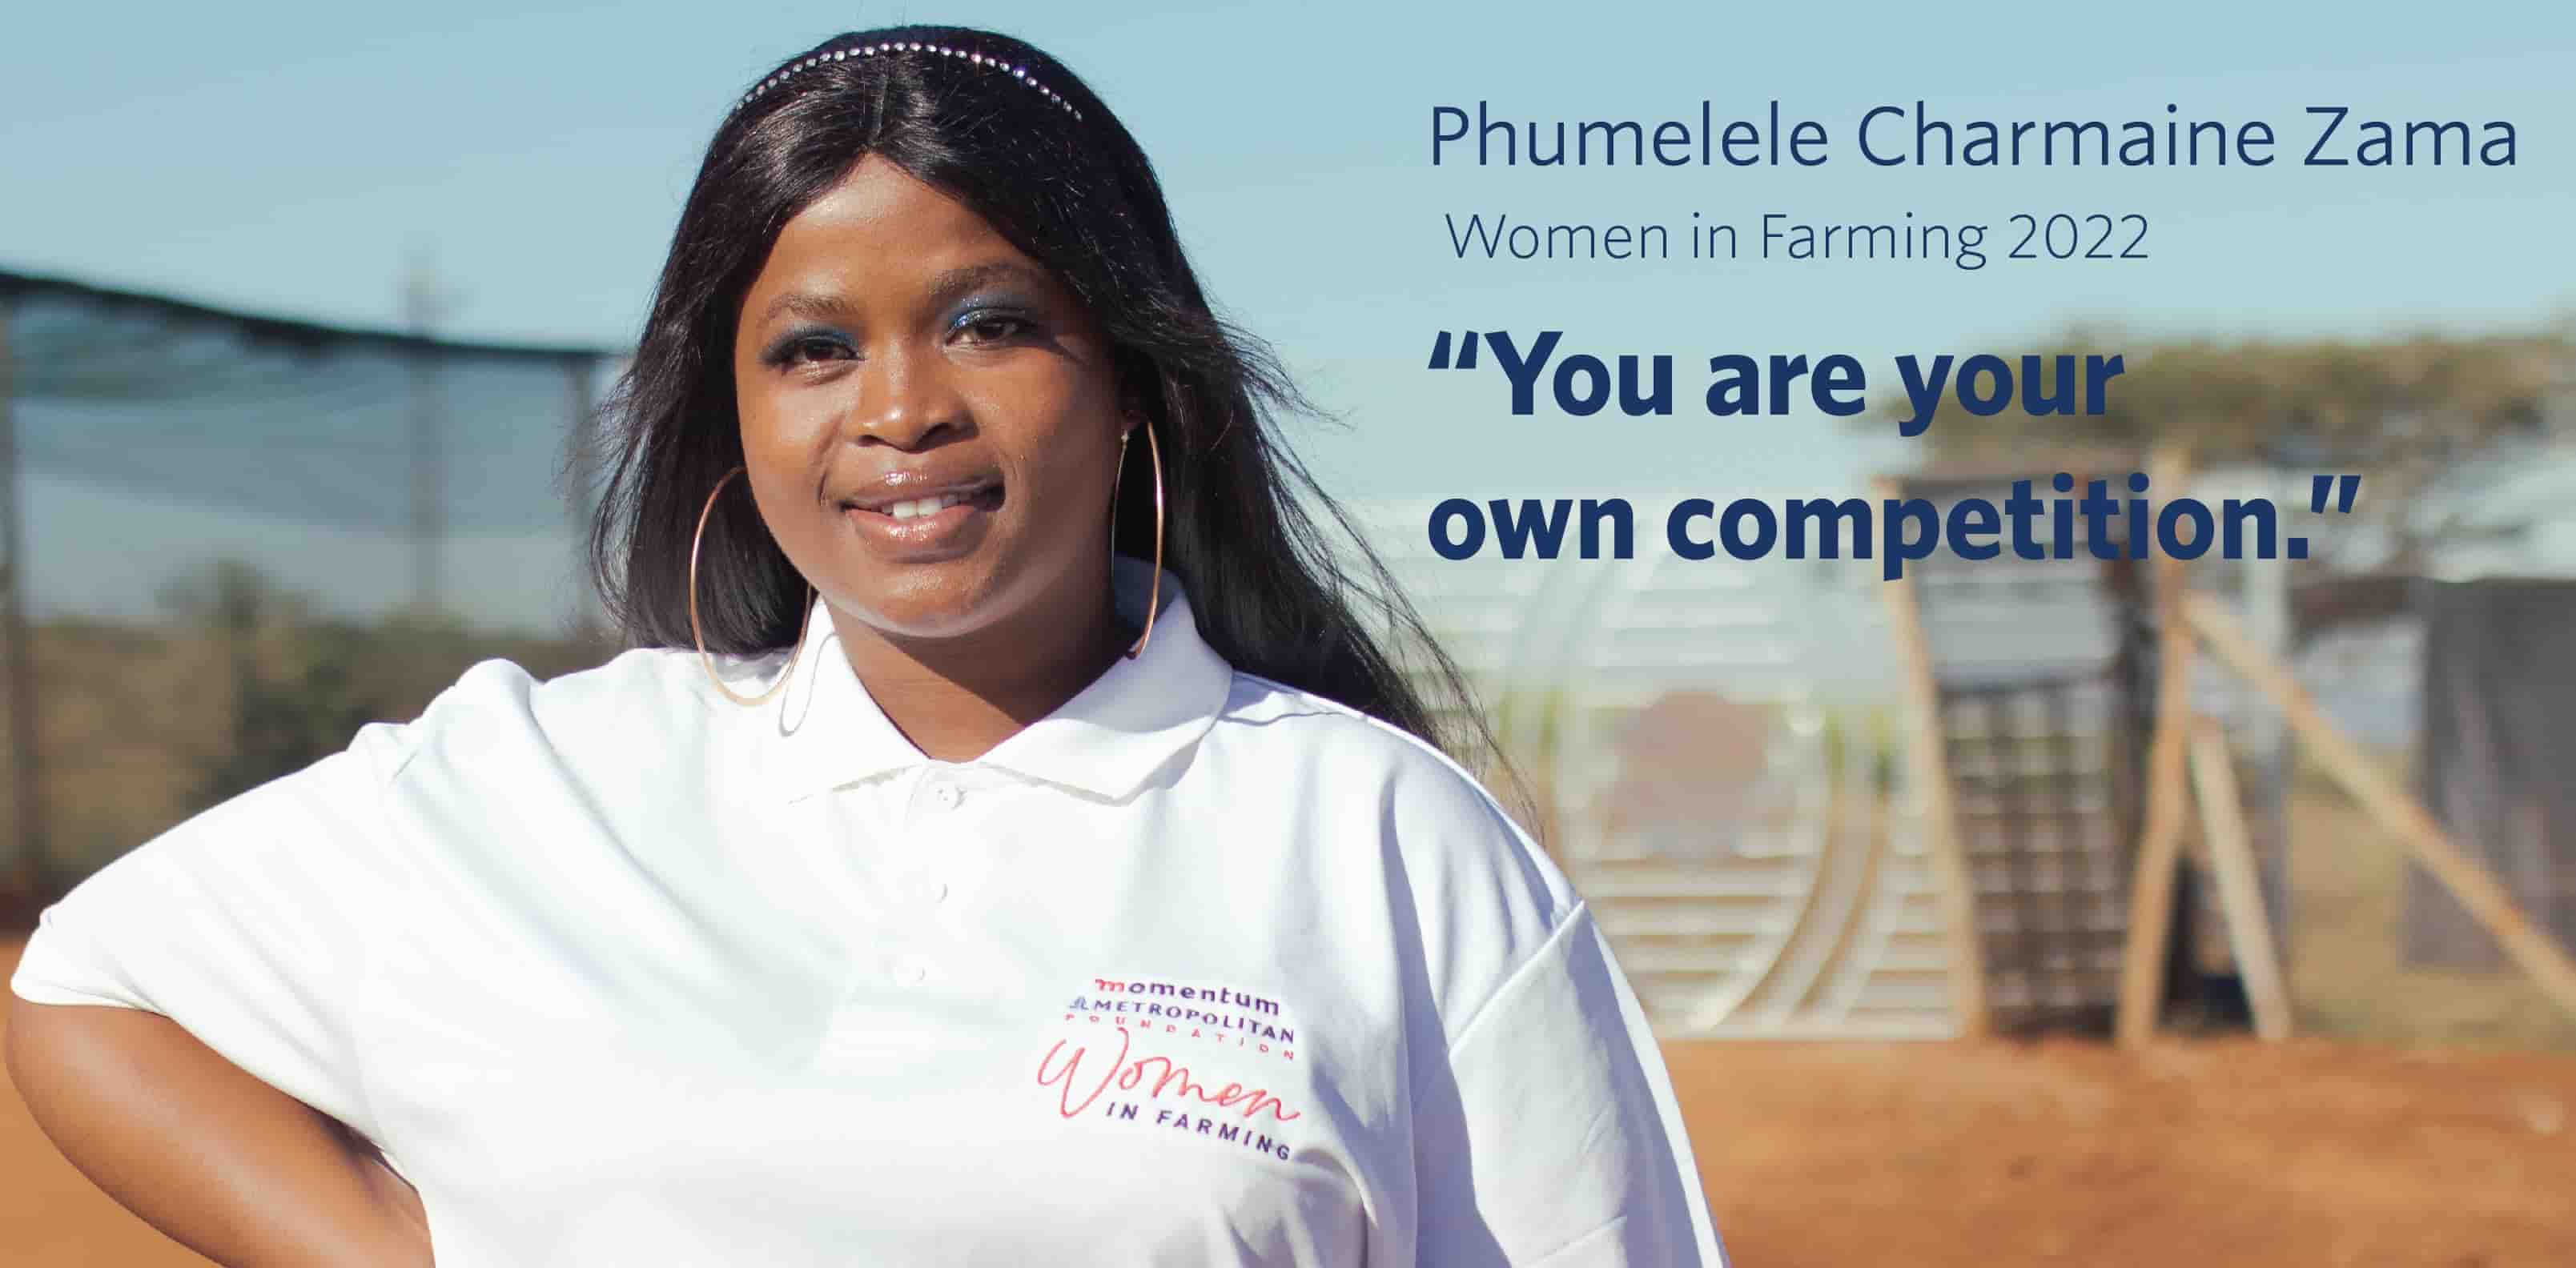 Phumelele Charmaine Zama, Momentum Metropolitan Foundation Women in Farming 2022 cohort.